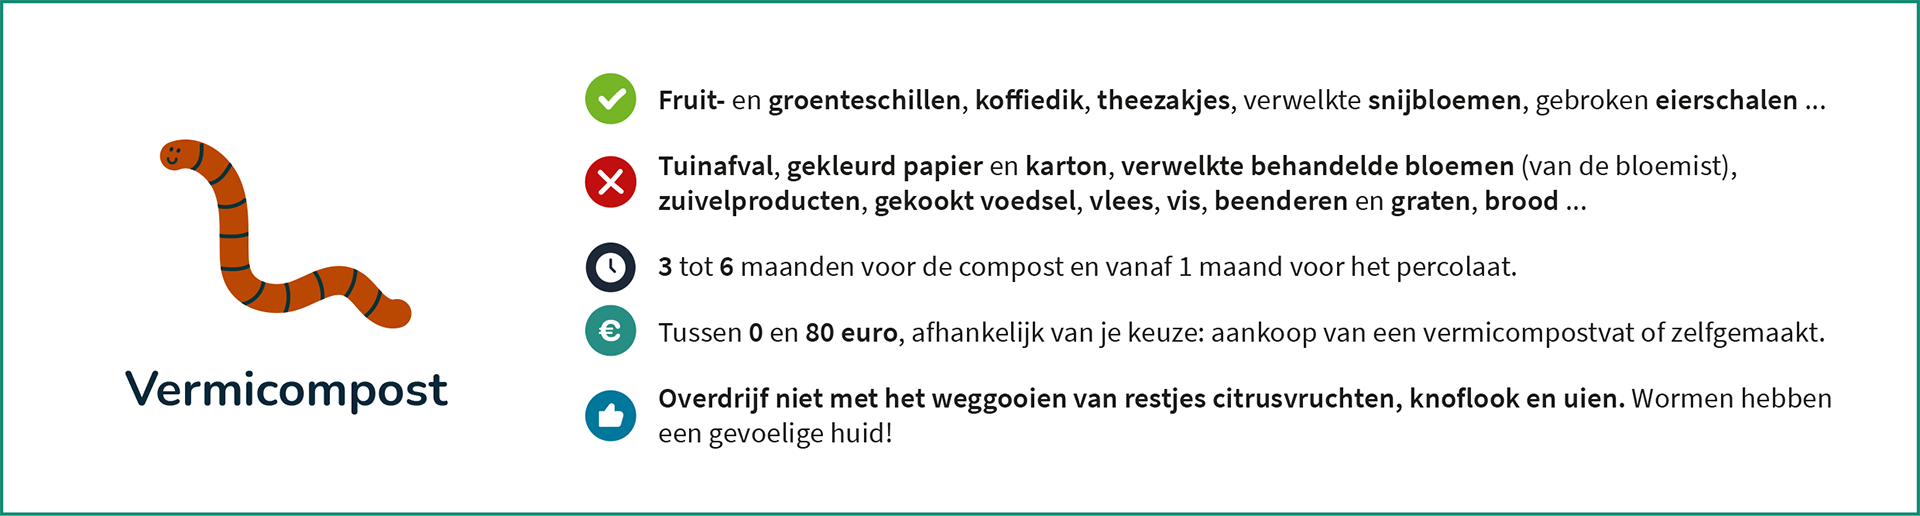 infogvermi-nl_0